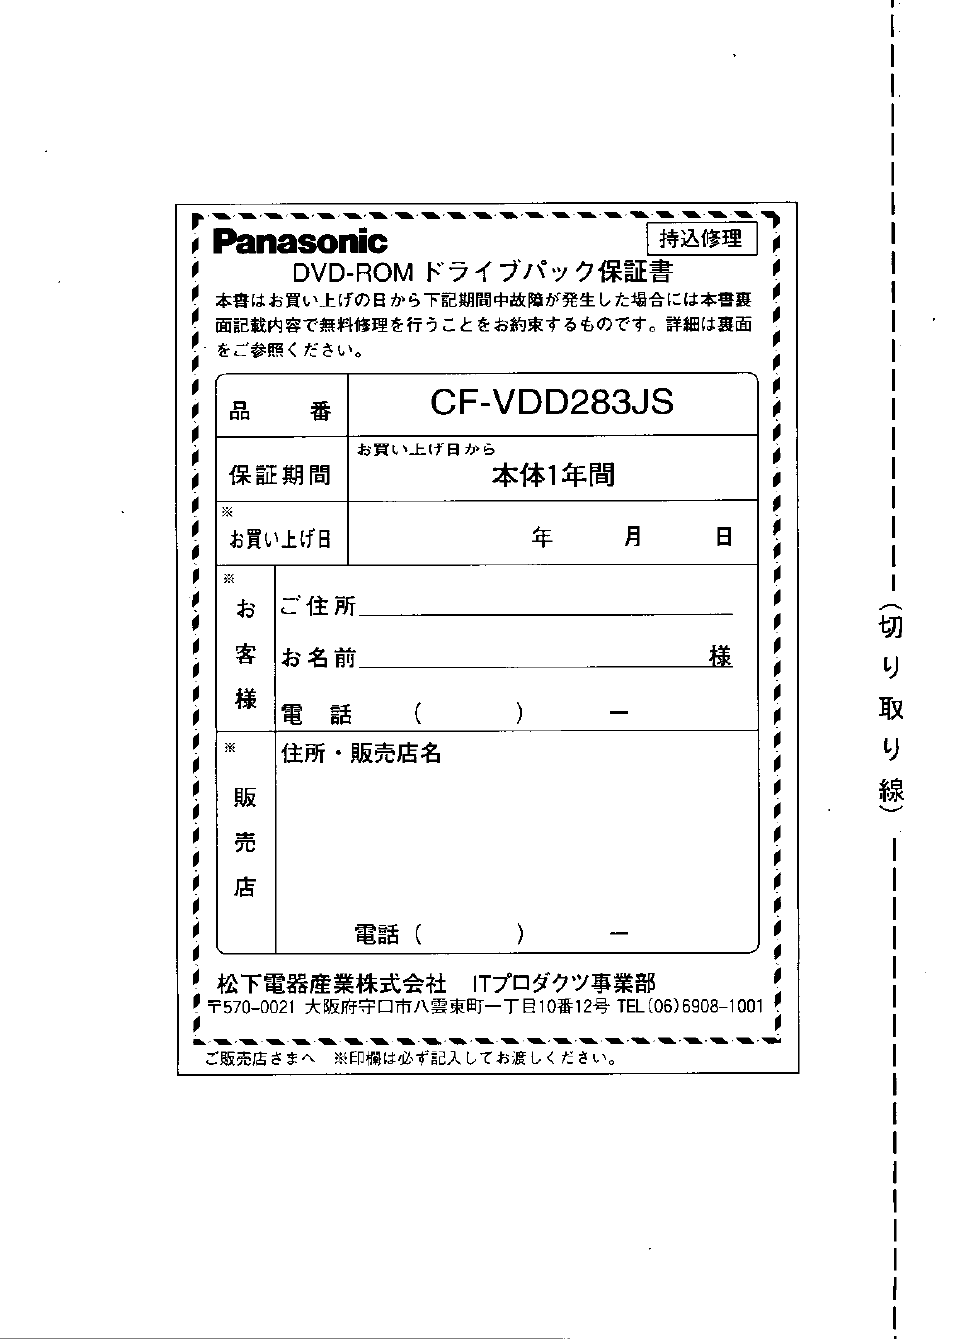 Panasonic | Panasonic DVD-ROM CF-VDD283 Manuel d'utilisation | Page 36 / 36